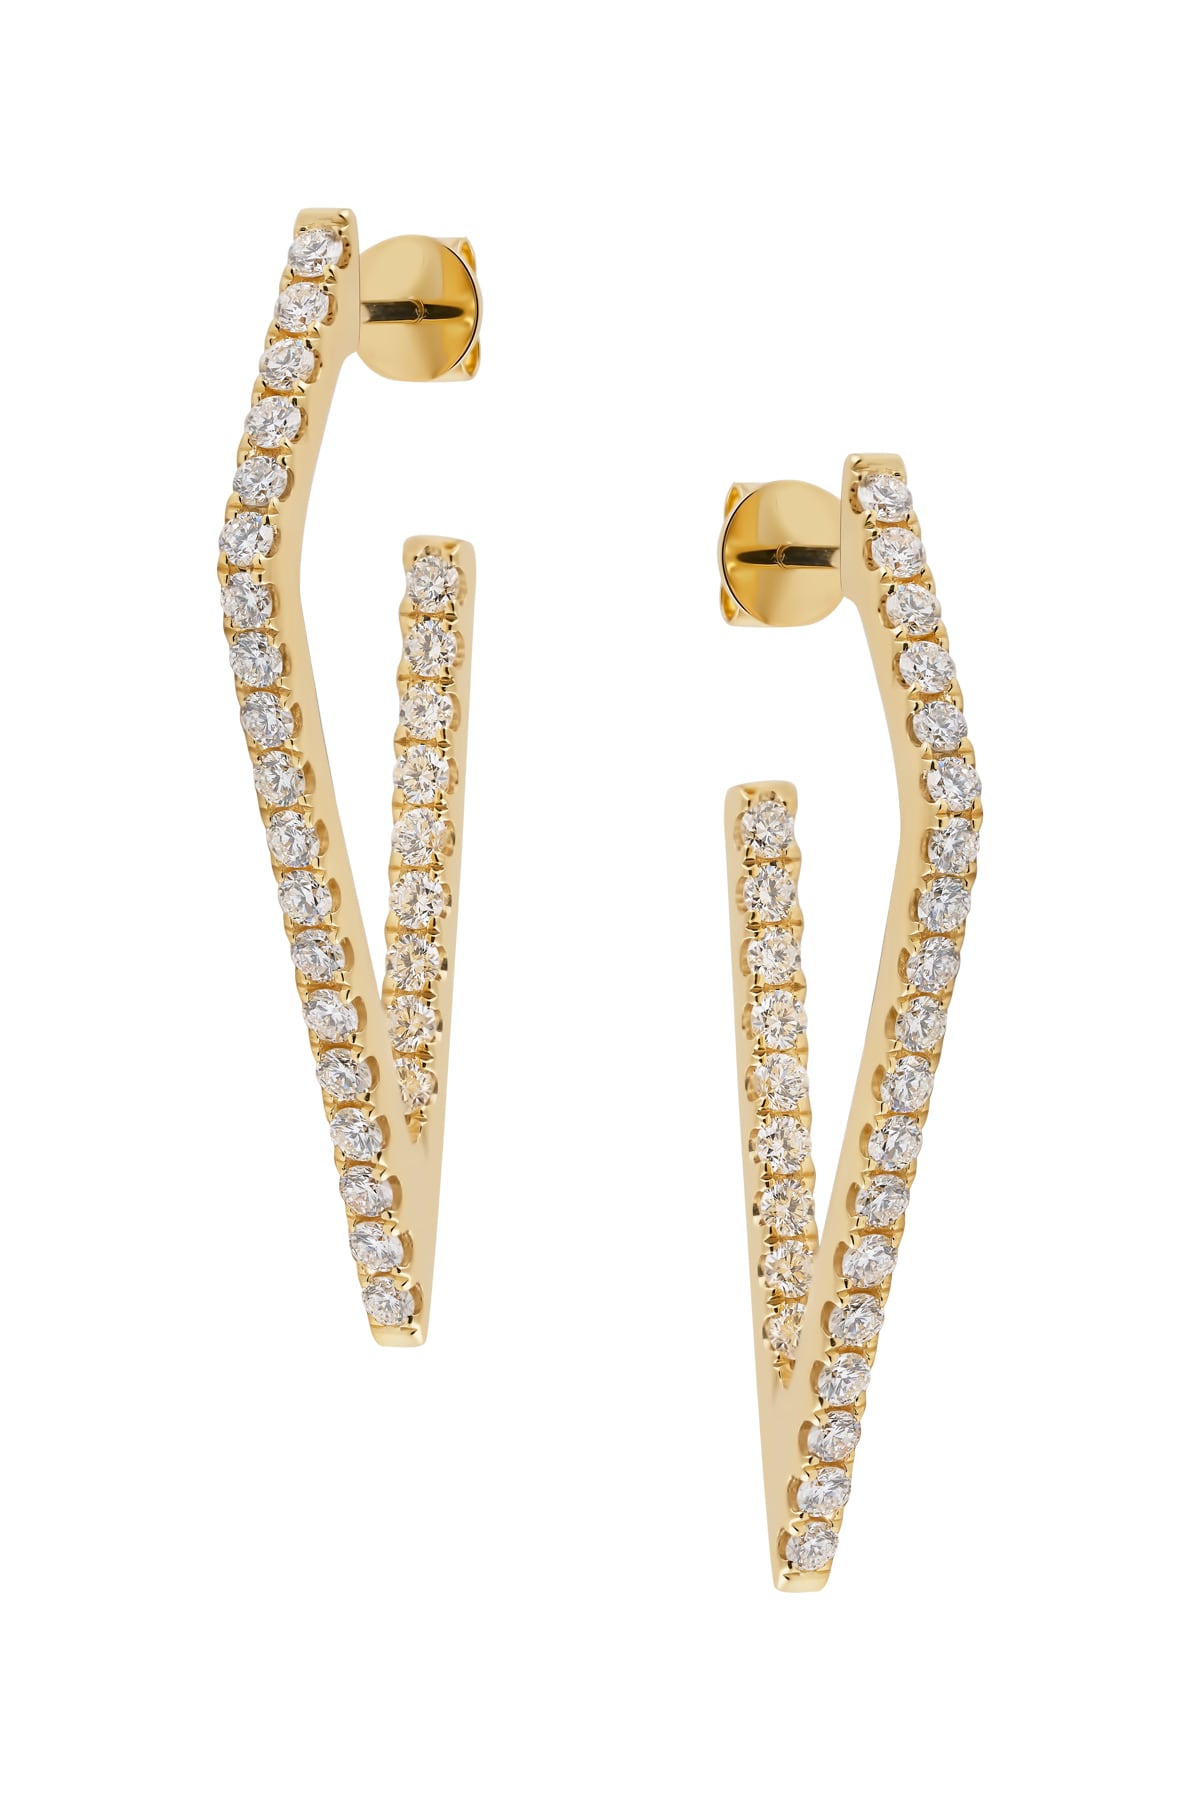 Long Triangular Shaped Diamond Drop Earrings in Yellow Gold from LeGassick.